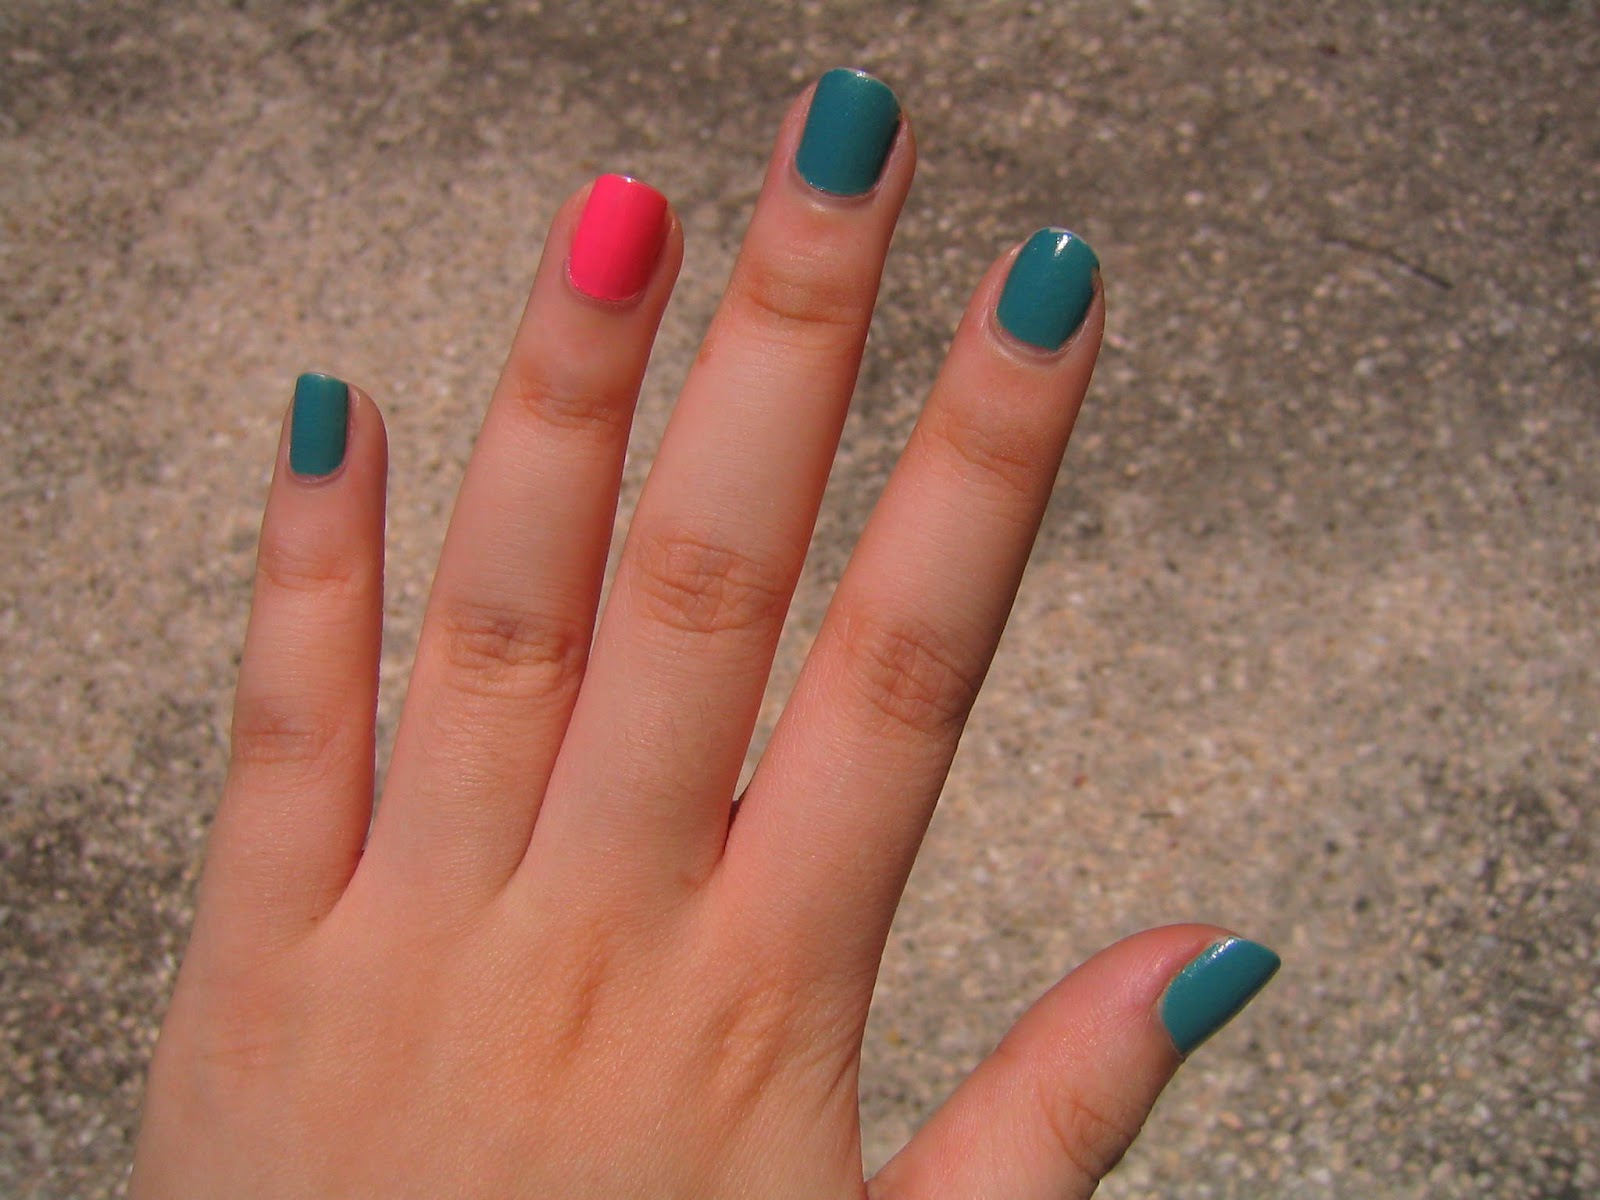 finger nail polish that changes color